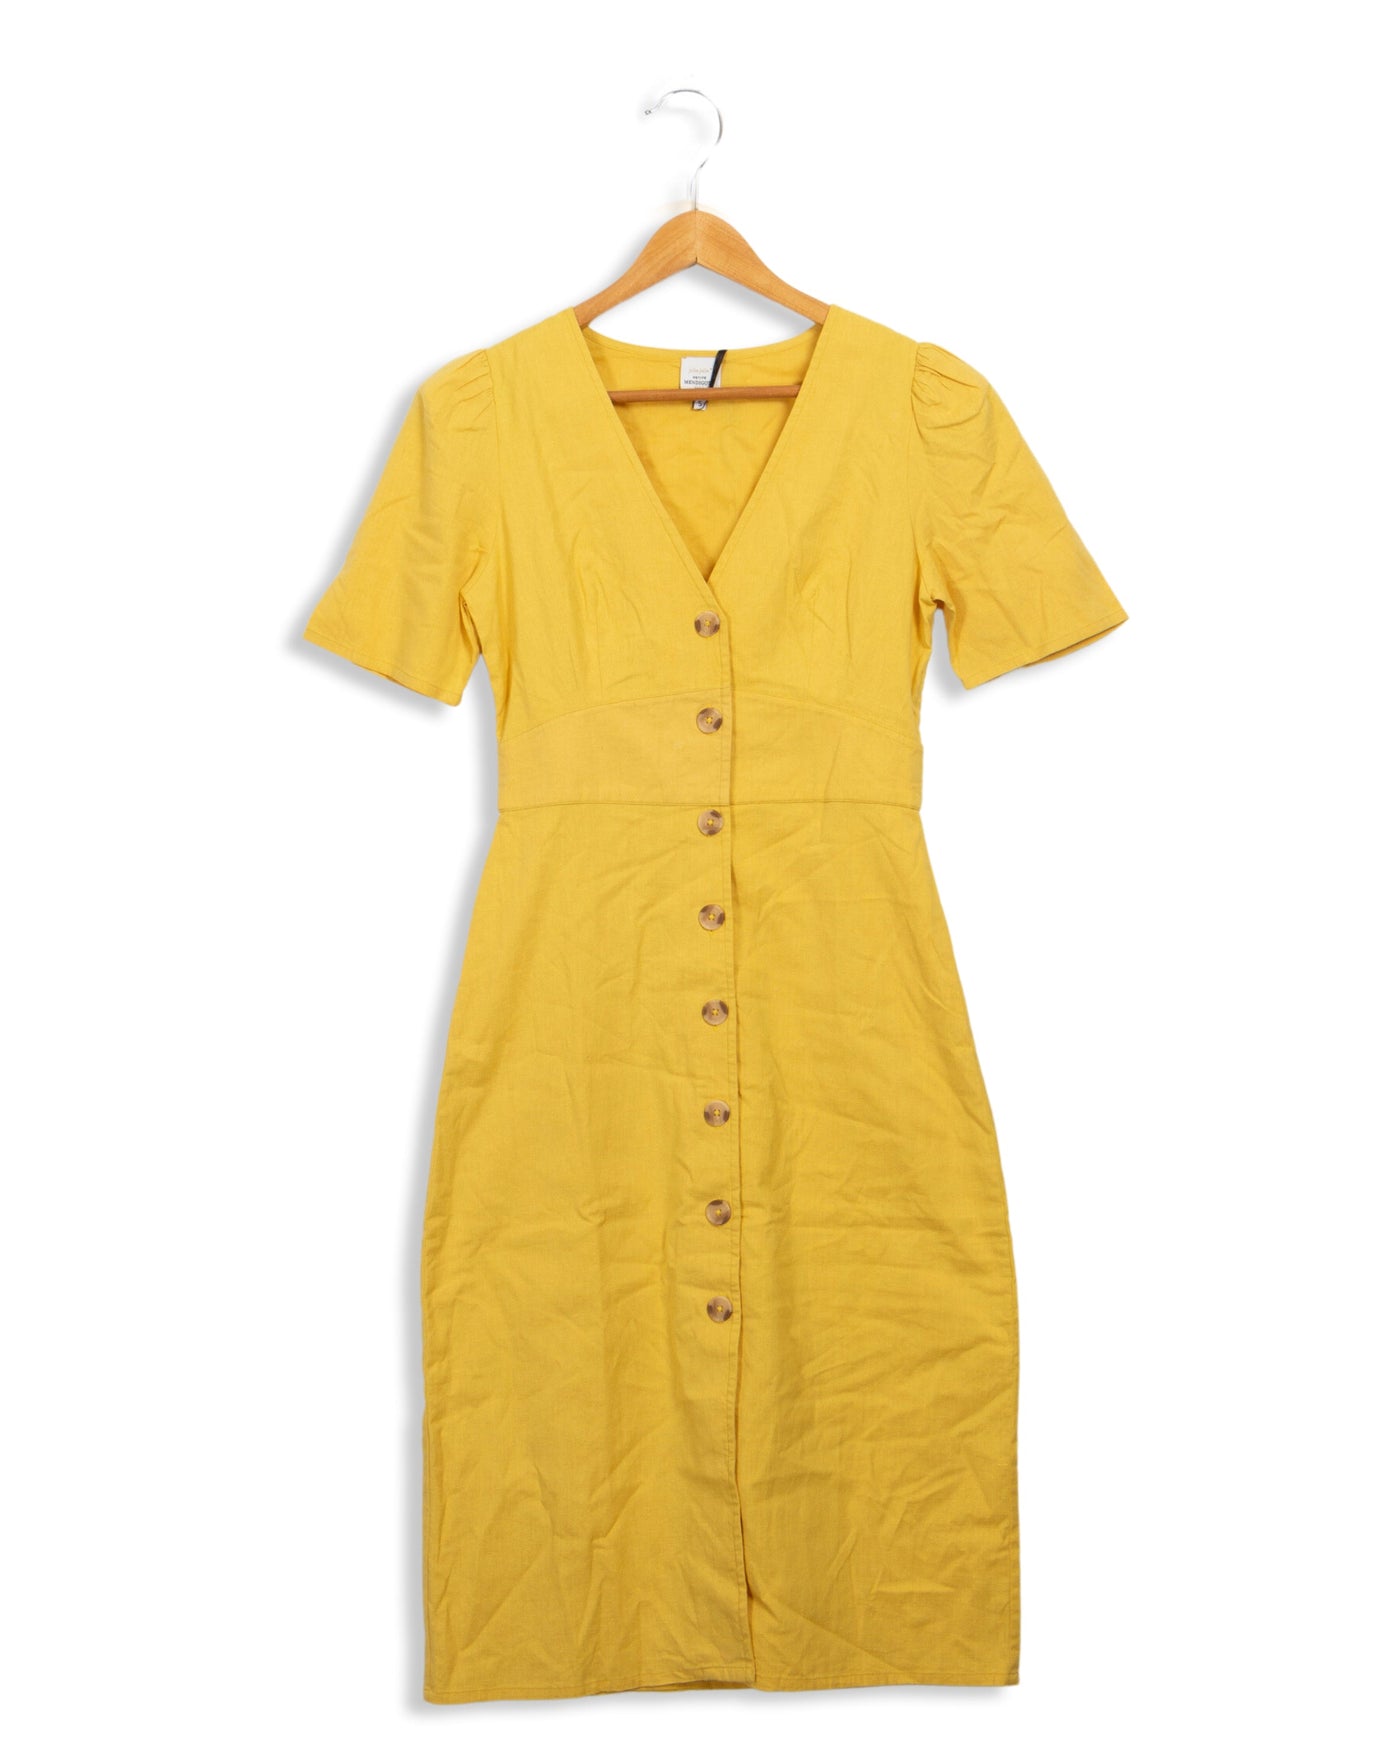 Robe jaune avec boutonnière Petite Mendigote - S